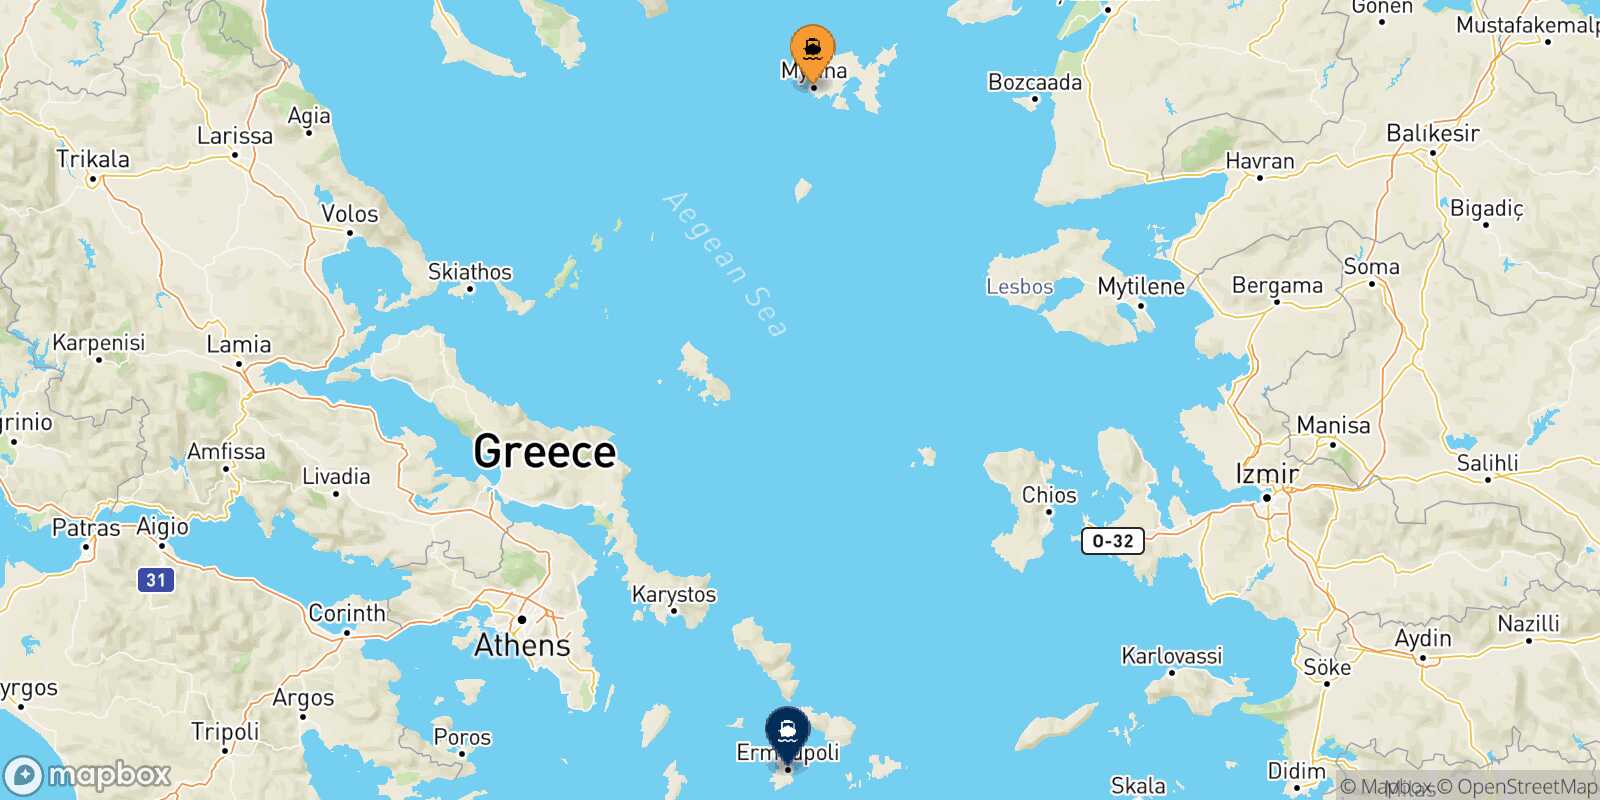 Mappa della rotta Mirina (Limnos) Syros